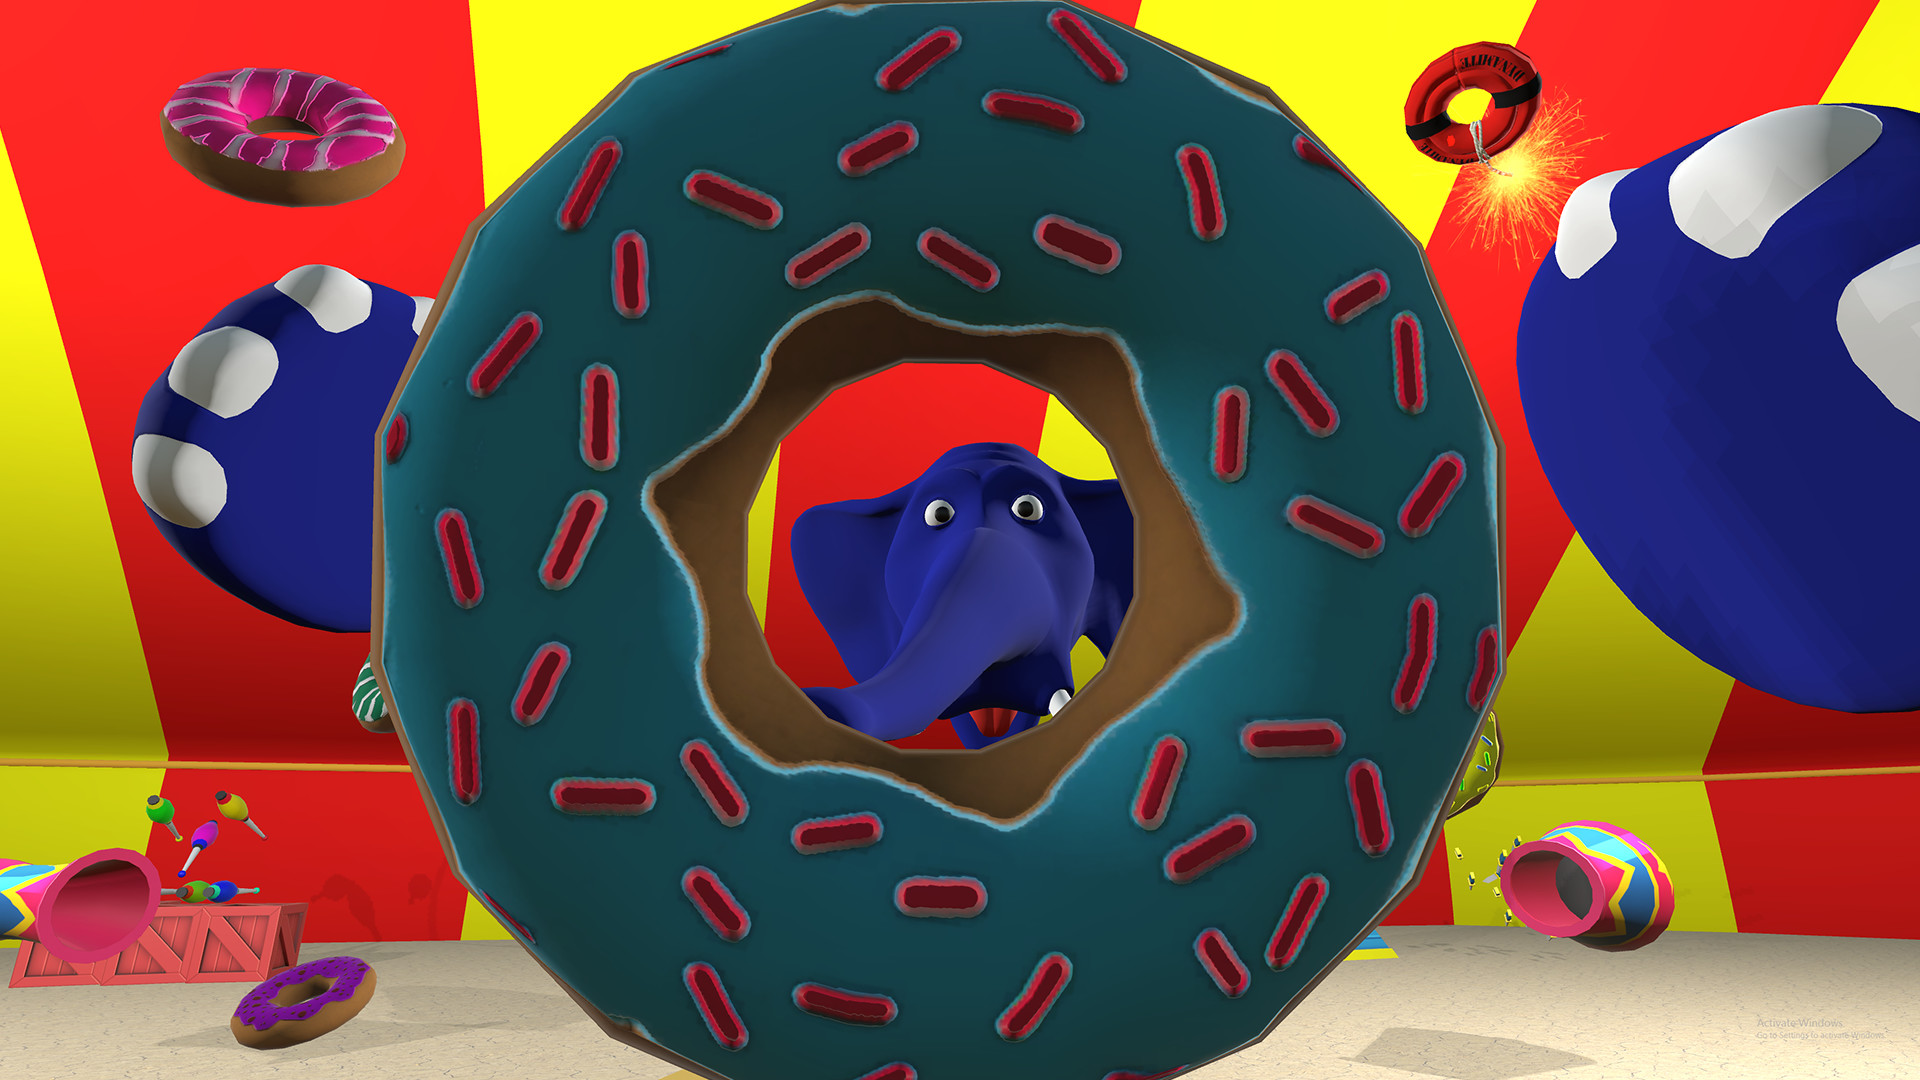 Donut Distraction screenshot